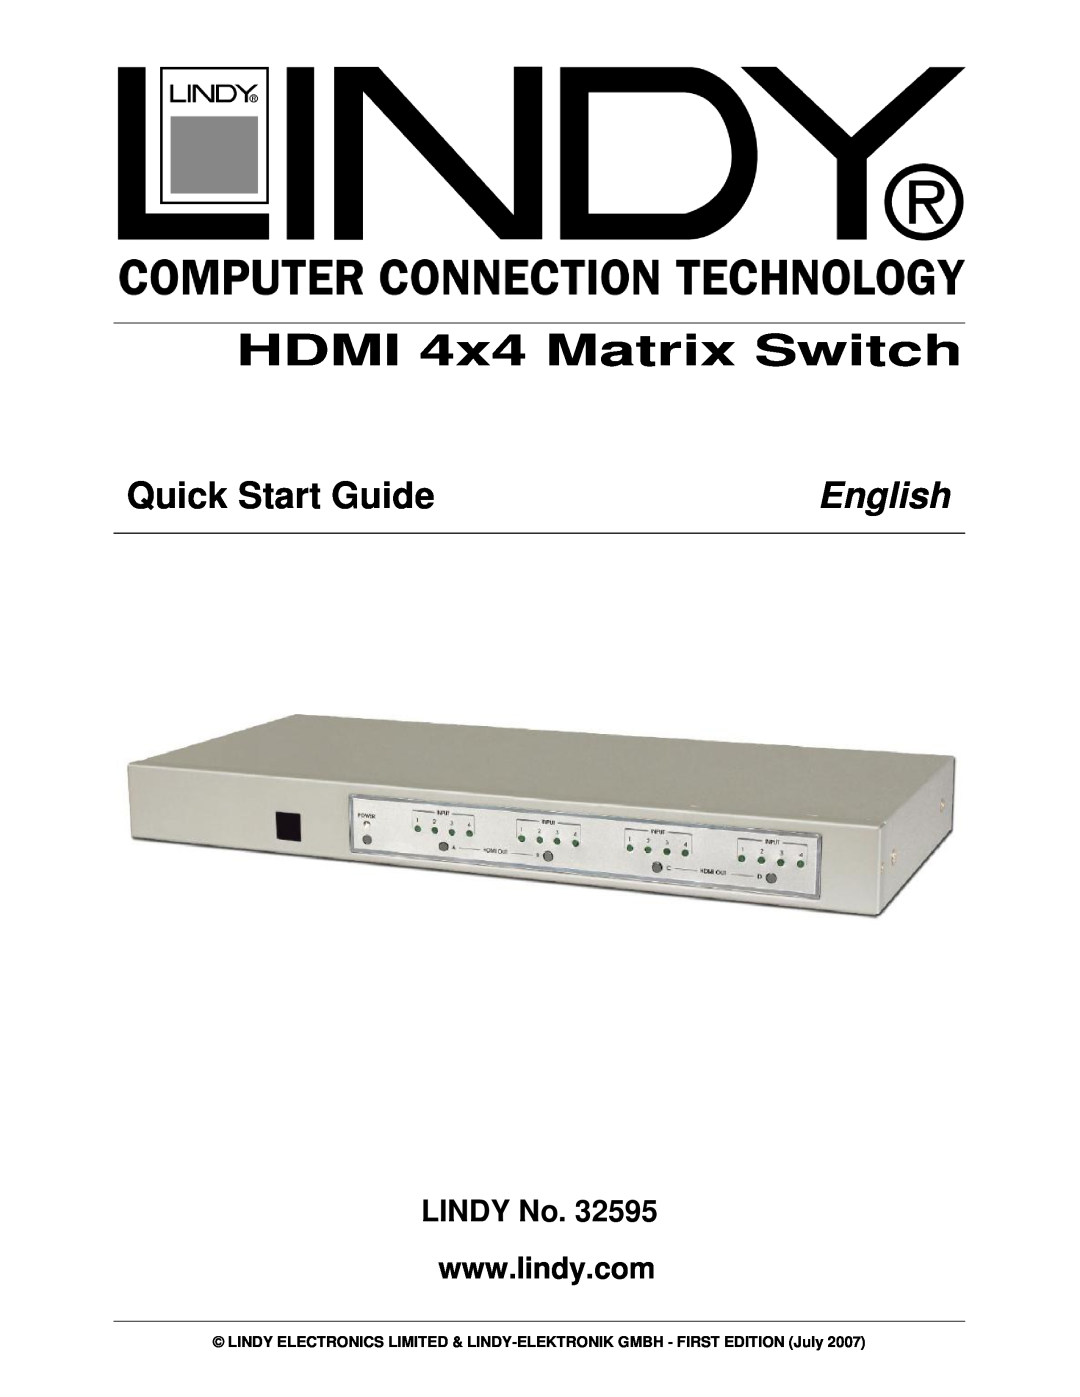 Lindy 32595 quick start HDMI 4x4 Matrix Switch, Quick Start Guide, English, LINDY No 